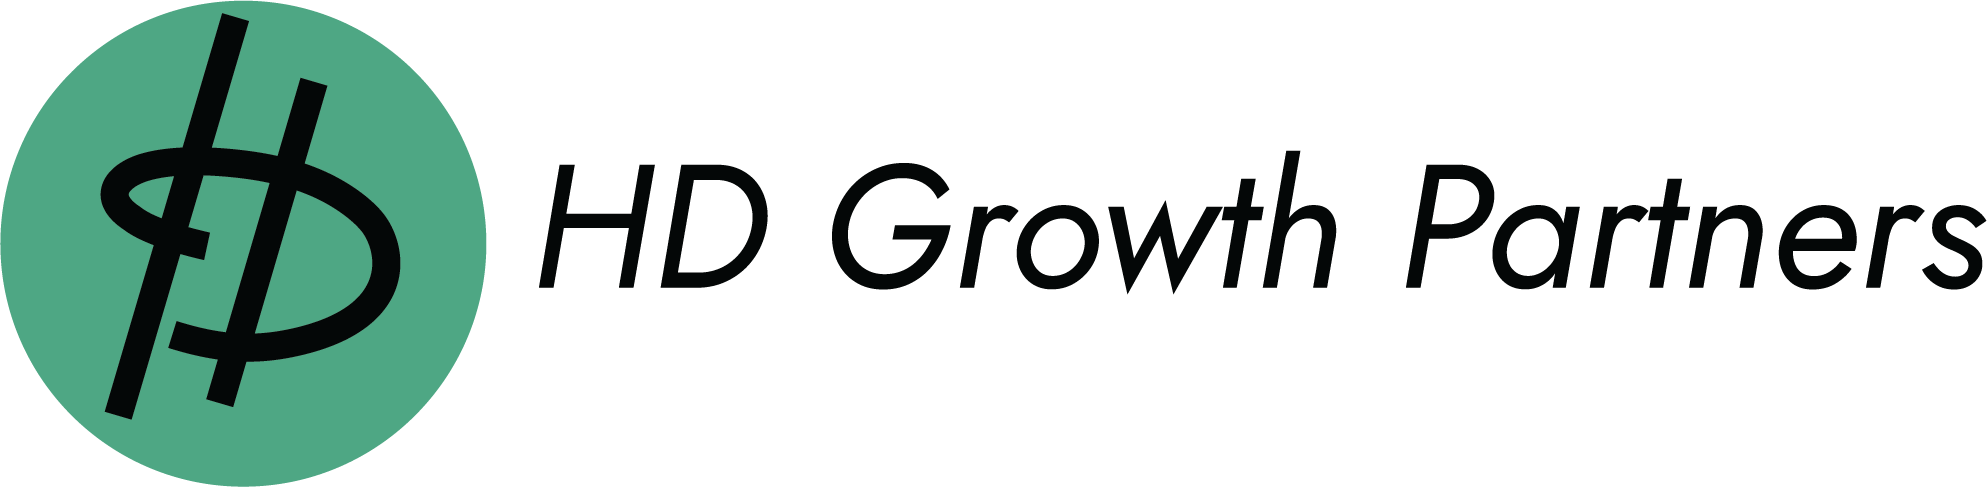 HD Growth Partners Logo